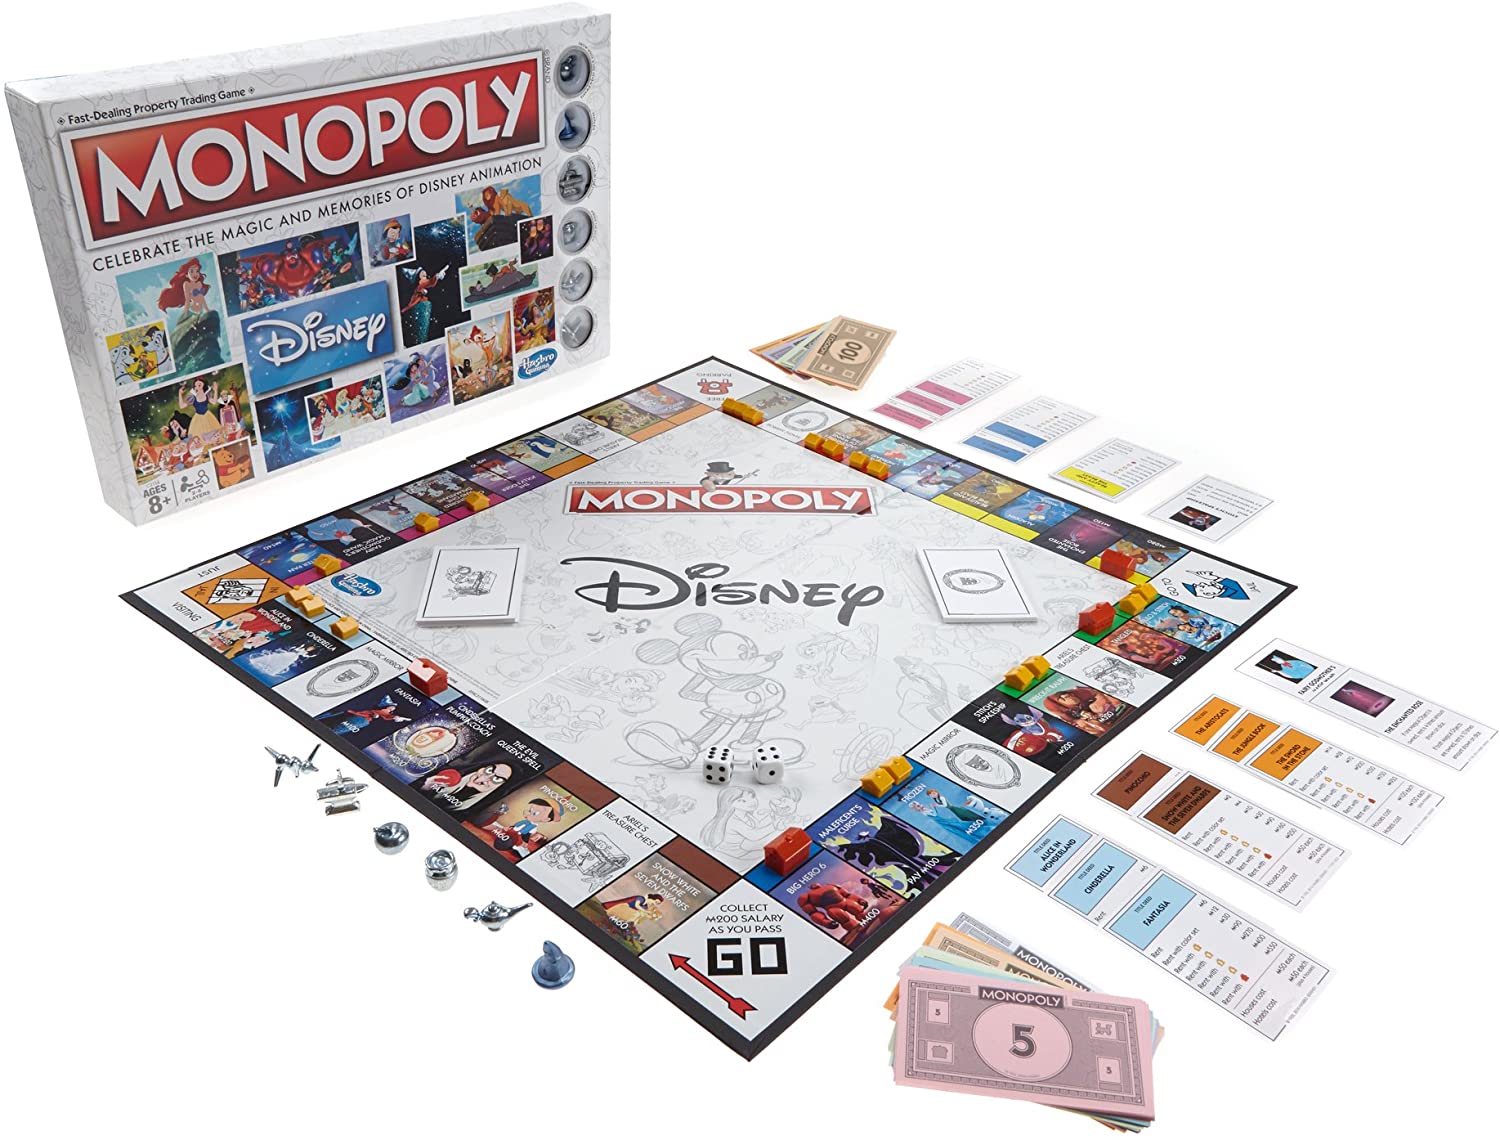 Newest Disney Monopoly Game Includes A Pop-Up Castle - Simplemost